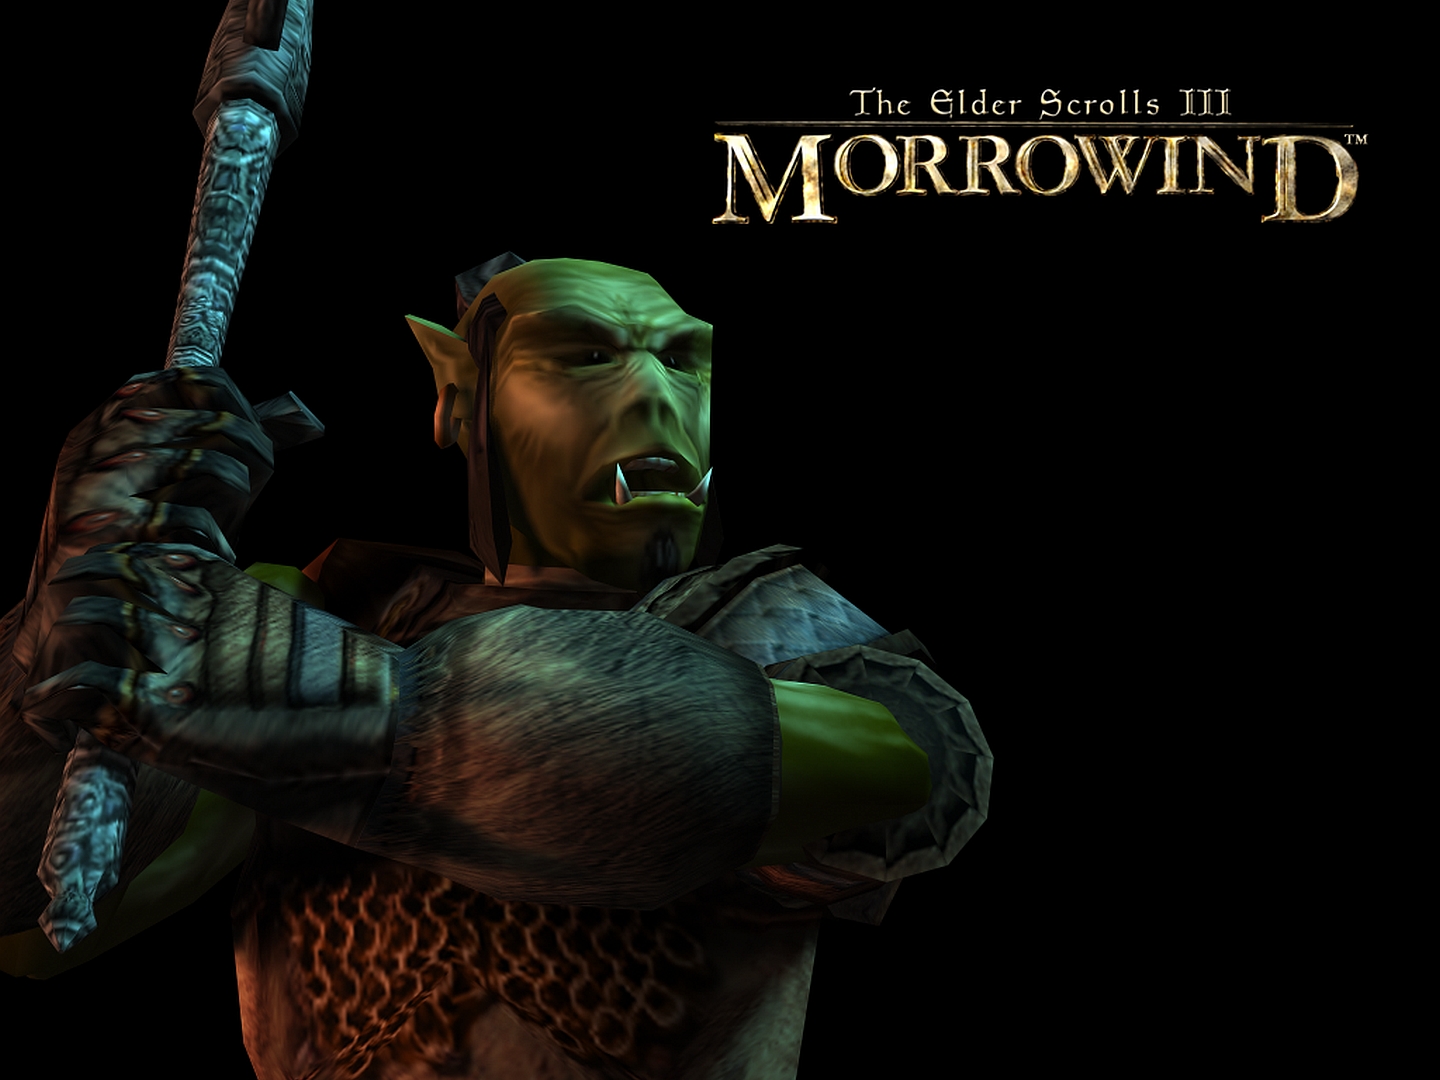 video game, the elder scrolls iii: morrowind, the elder scrolls